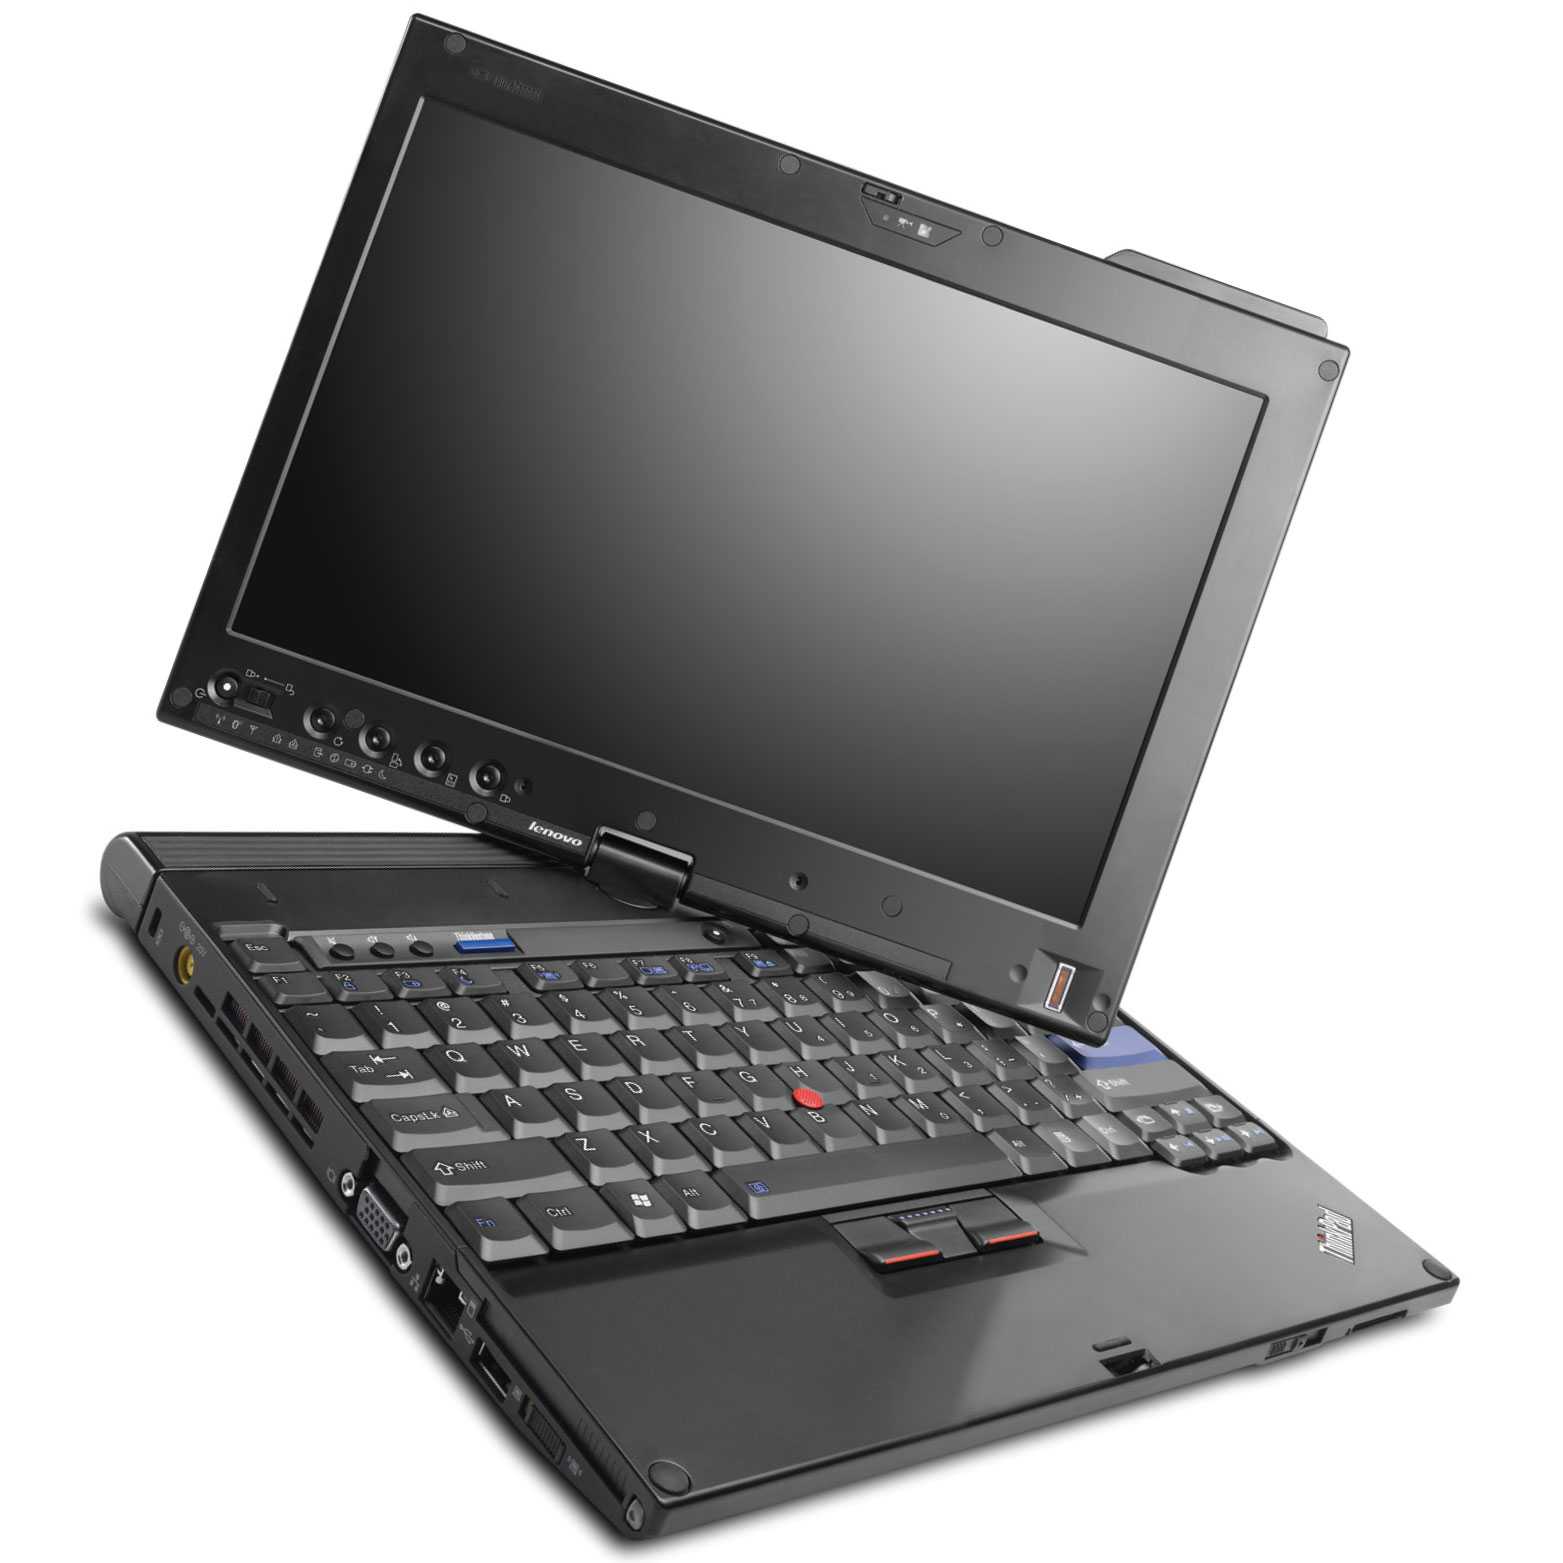 Lenovo thinkpad x121e - описание, характеристики, тест, отзывы, цены, фото